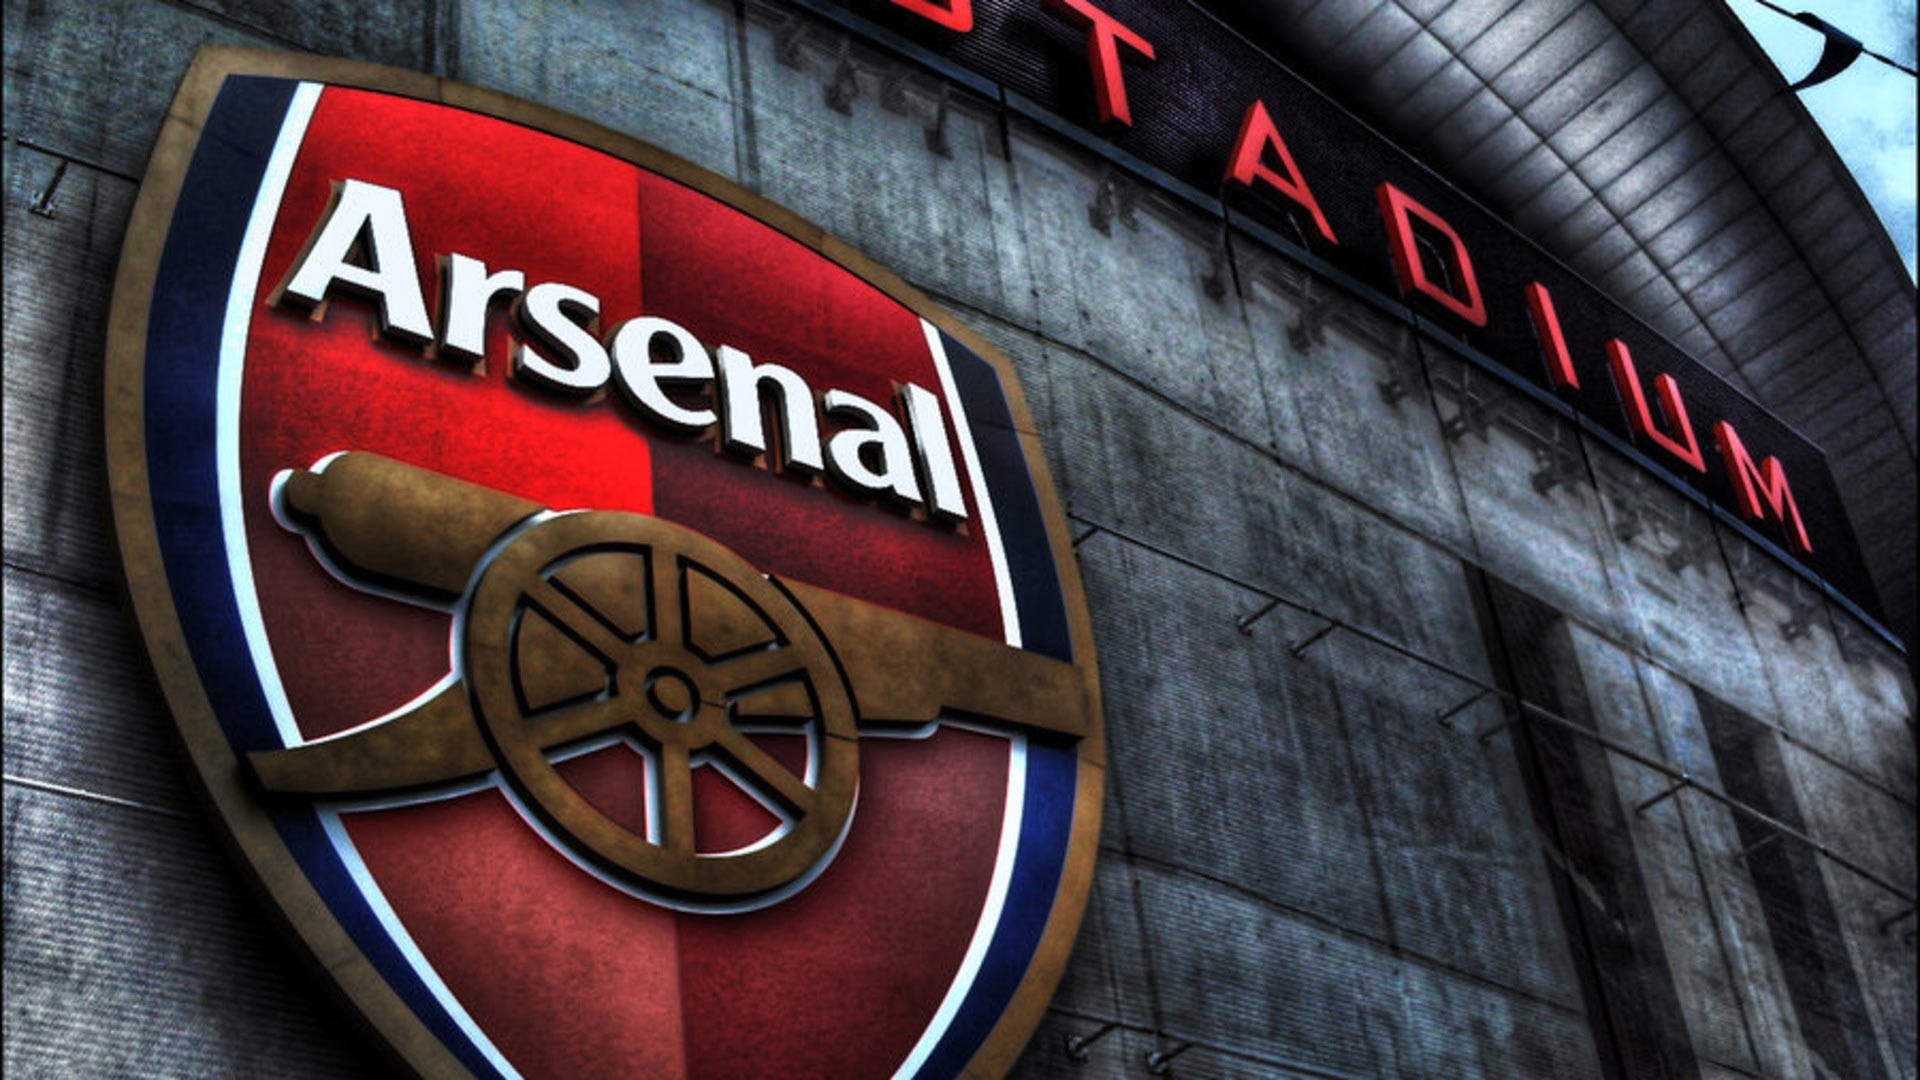 Arsenal Wallpaper Android - HD Wallpaper 